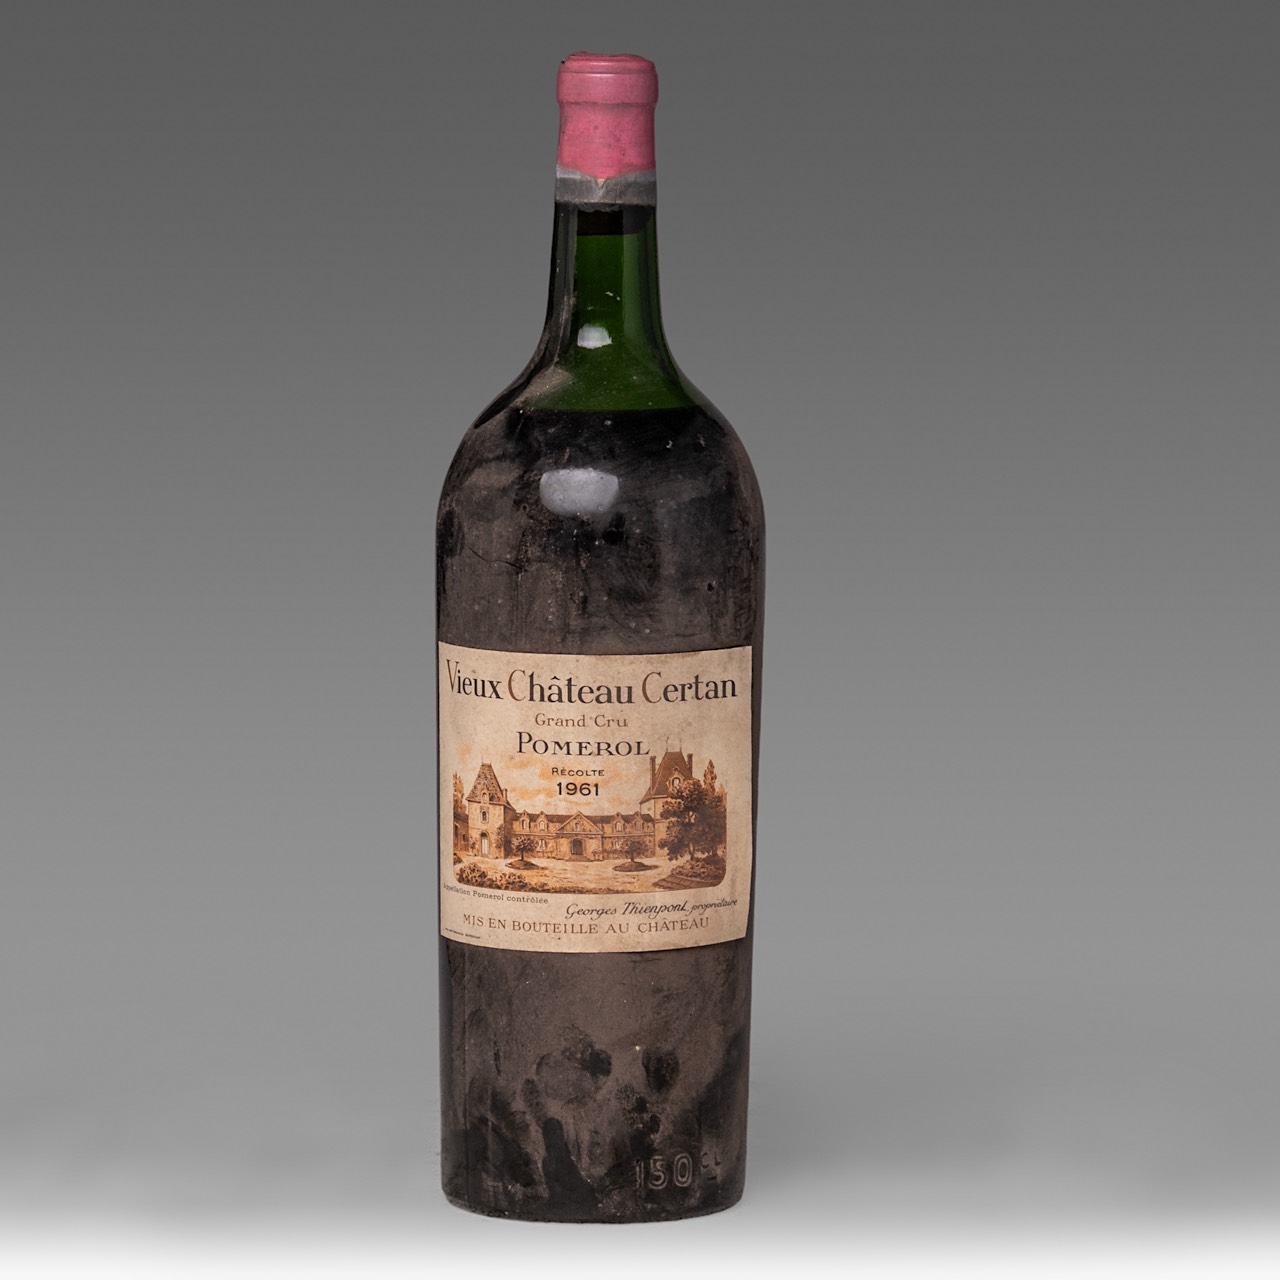 A magnum bottle Vieux Chateau Certan, Grand Cru, Pomerol, 1961, 150 CL